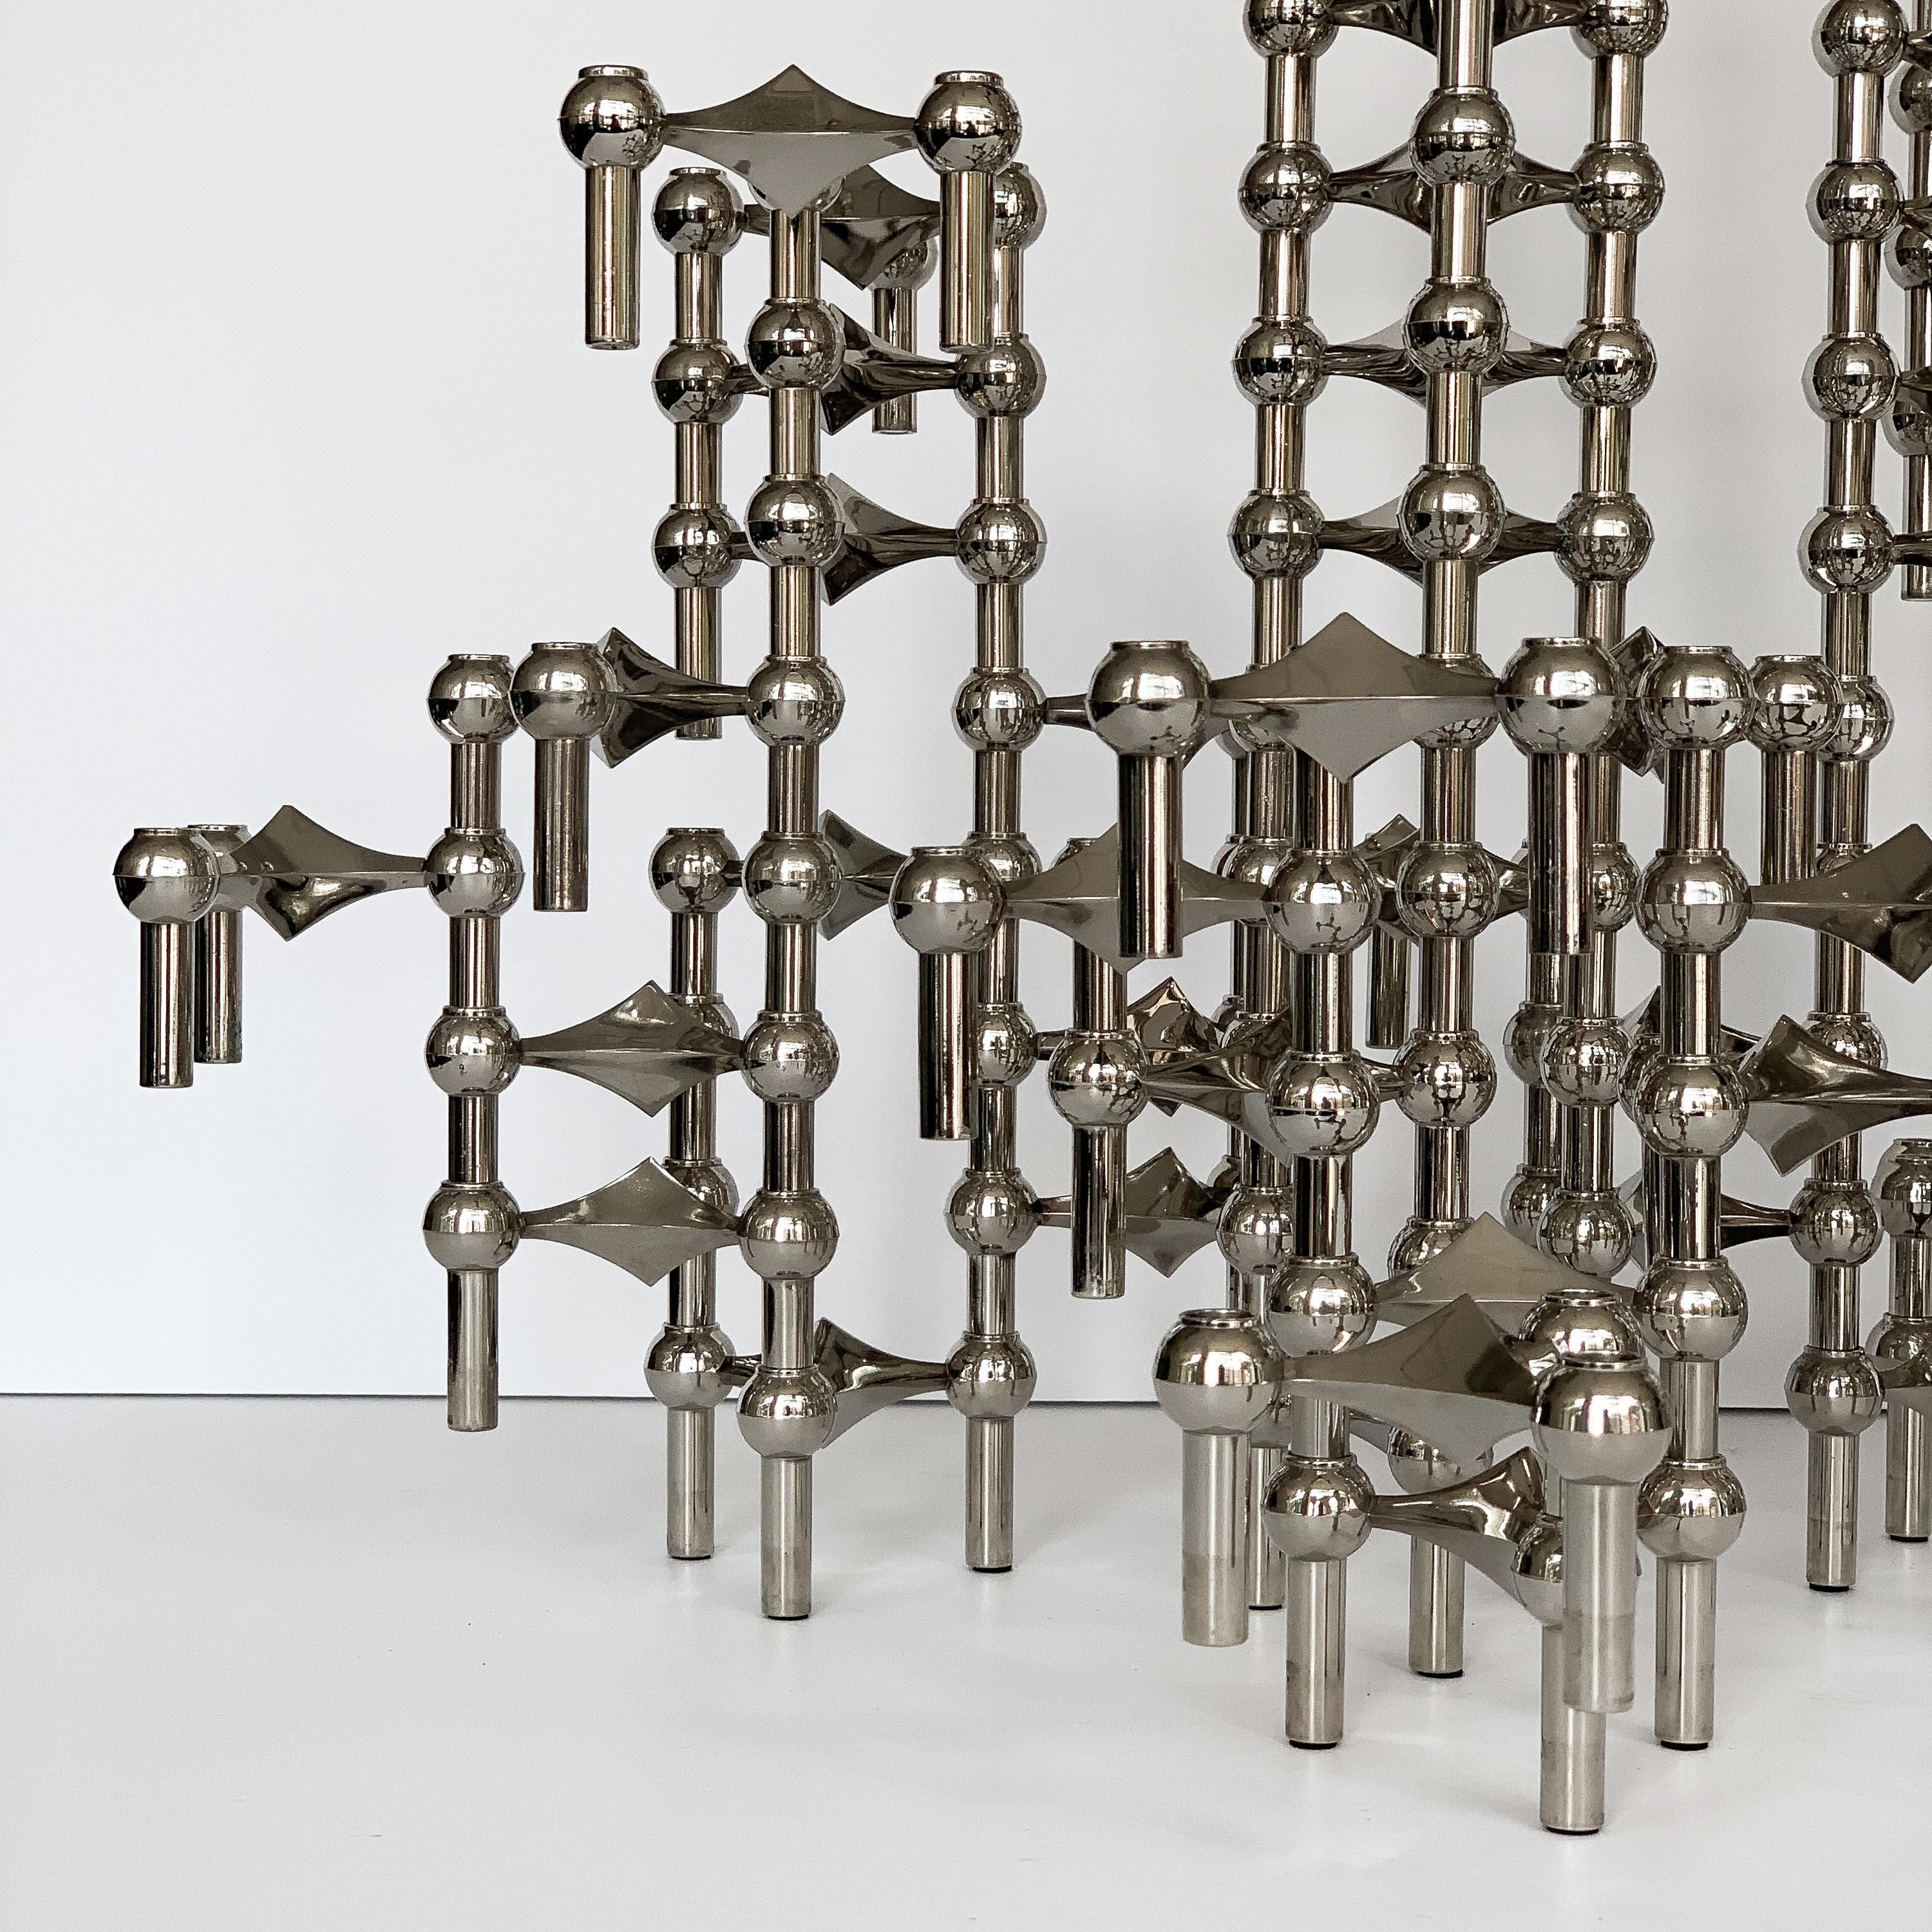 Set of 100 Piece Modular Candlestick Sculpture by Fritz Nagel and Caesar Stoffi 2